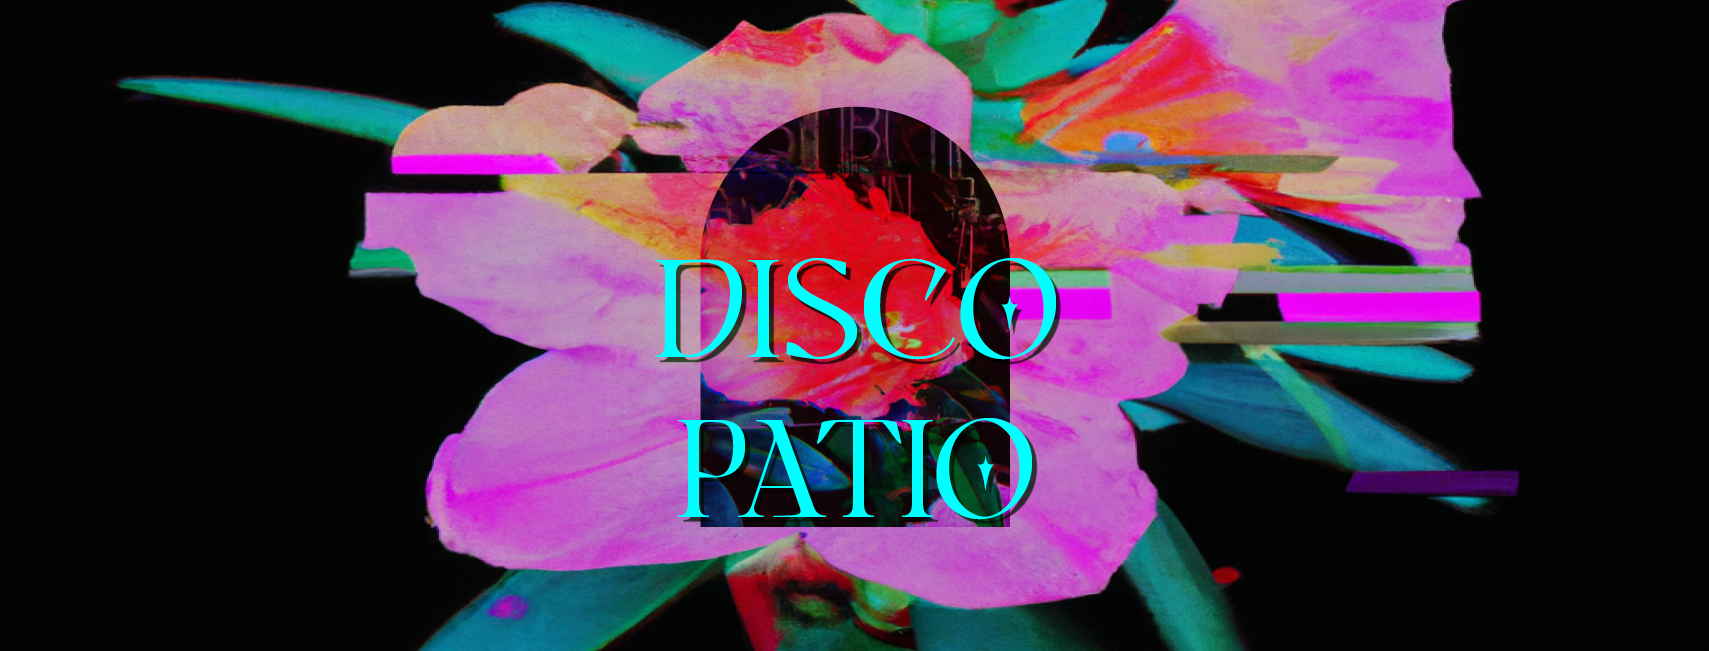 DISCO PATIO V [CANCELED] - フライヤー裏